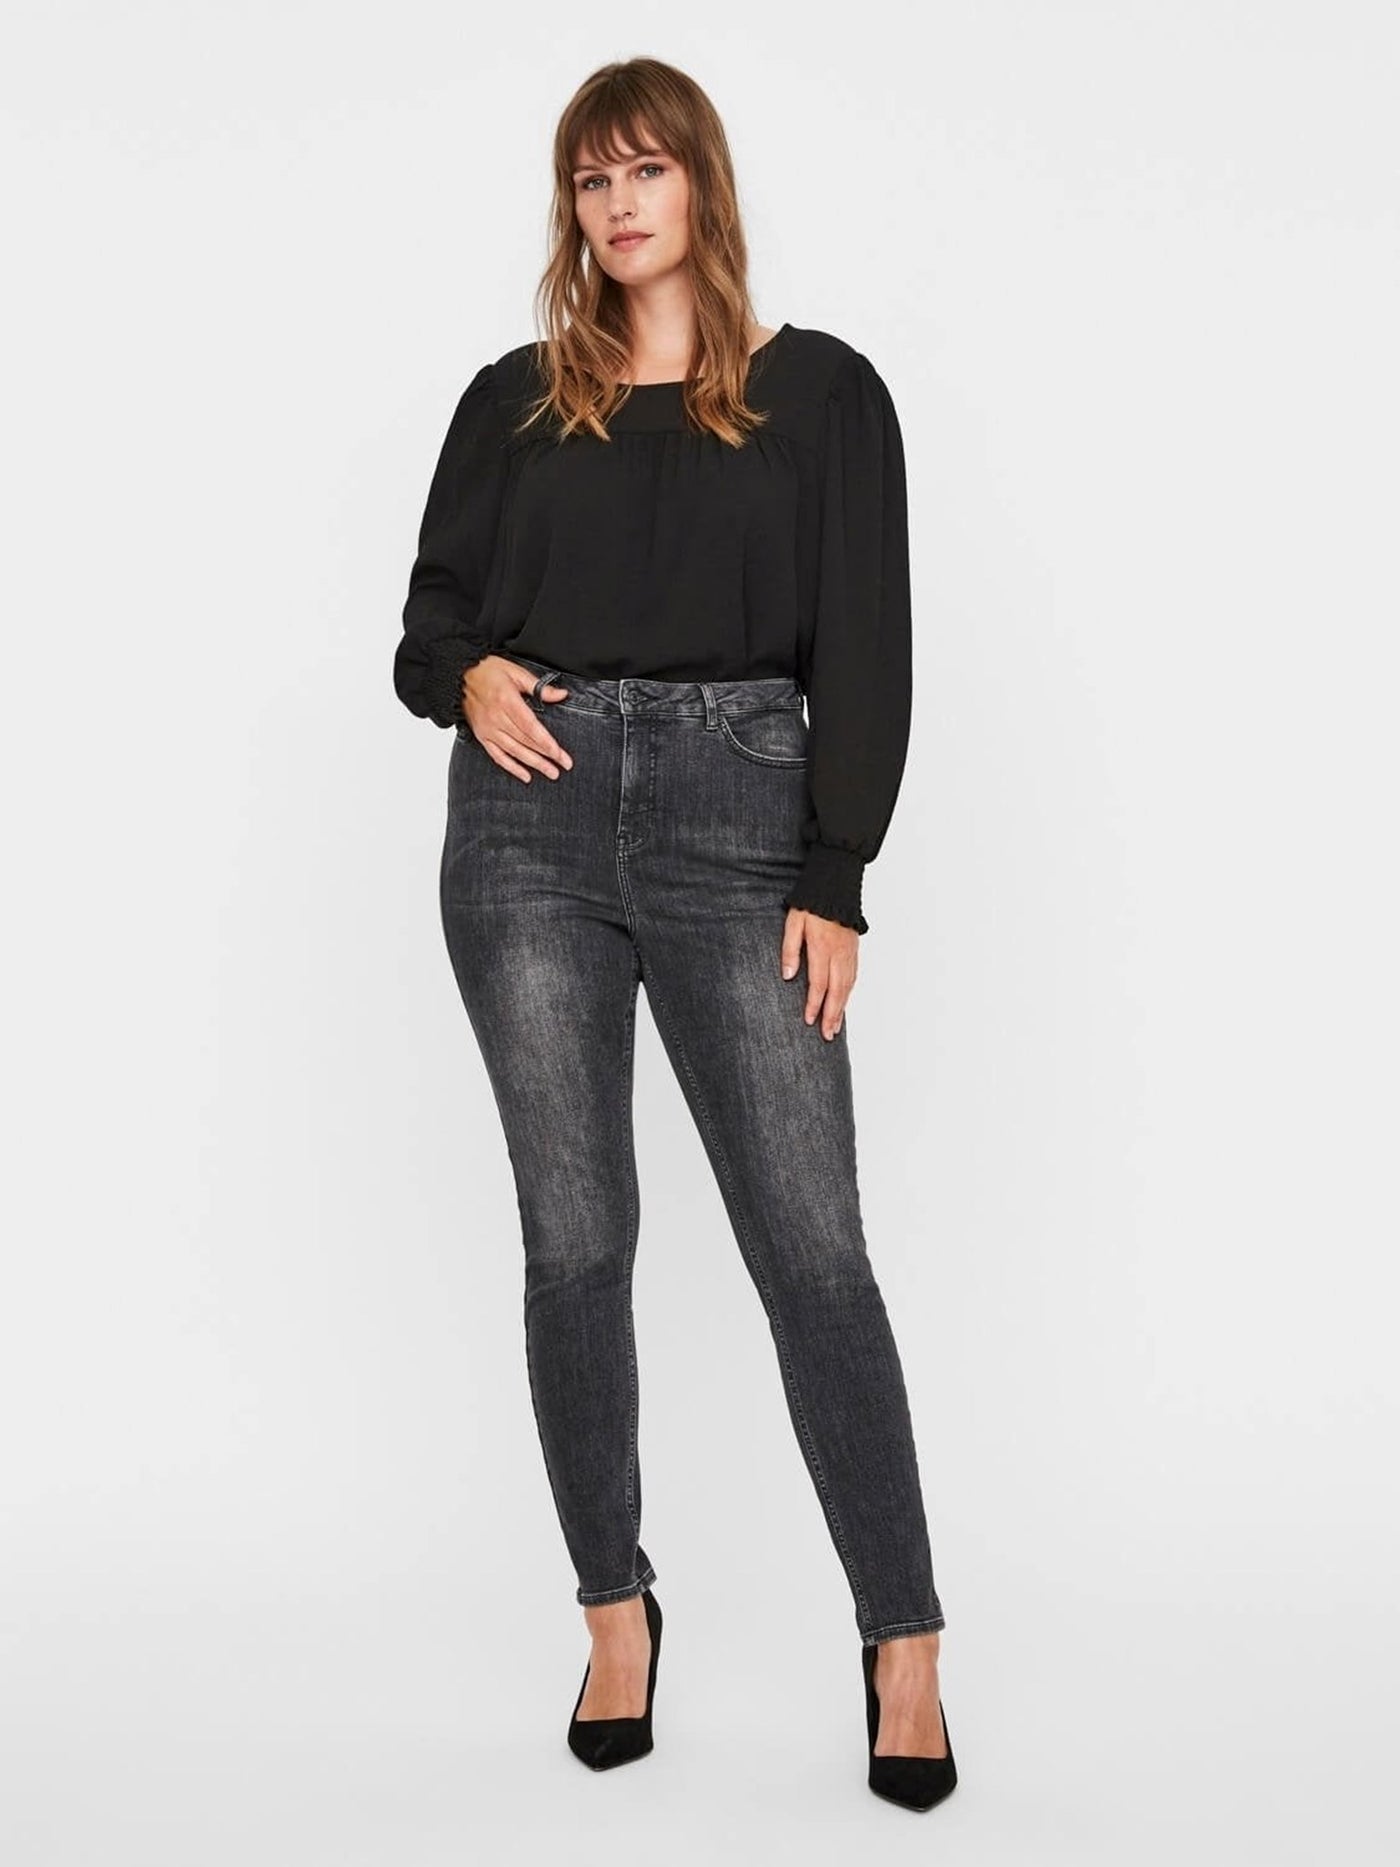 Lora Jeans high-waisted (Curve) - Black-grey denim - Vero Moda Curve - Black